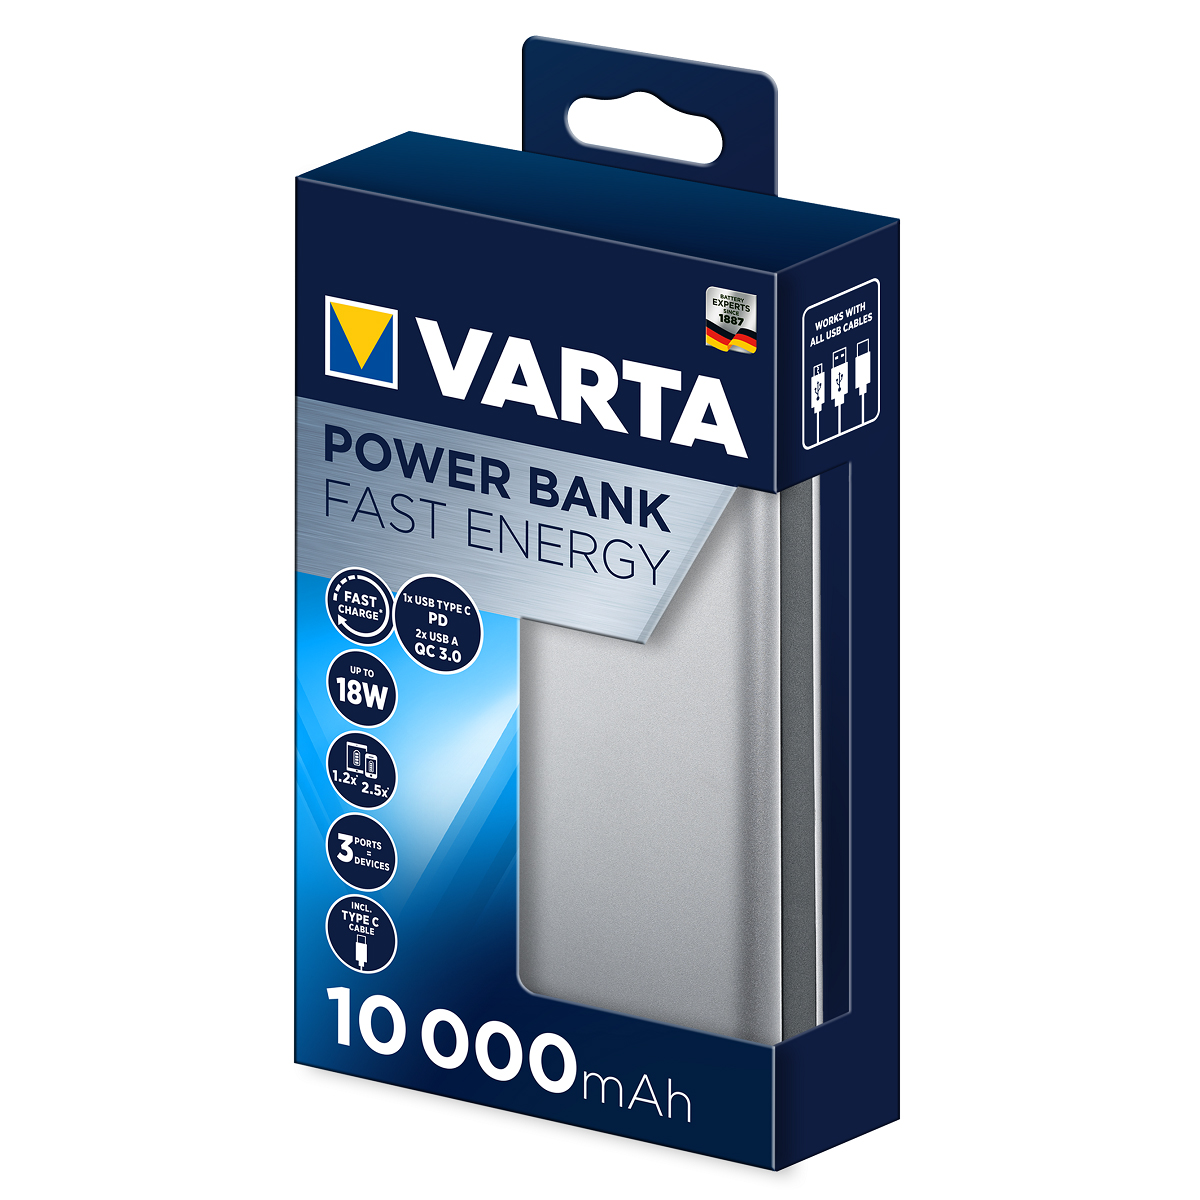 Varta Power Bank Fast Energy 10000mAh ezüst